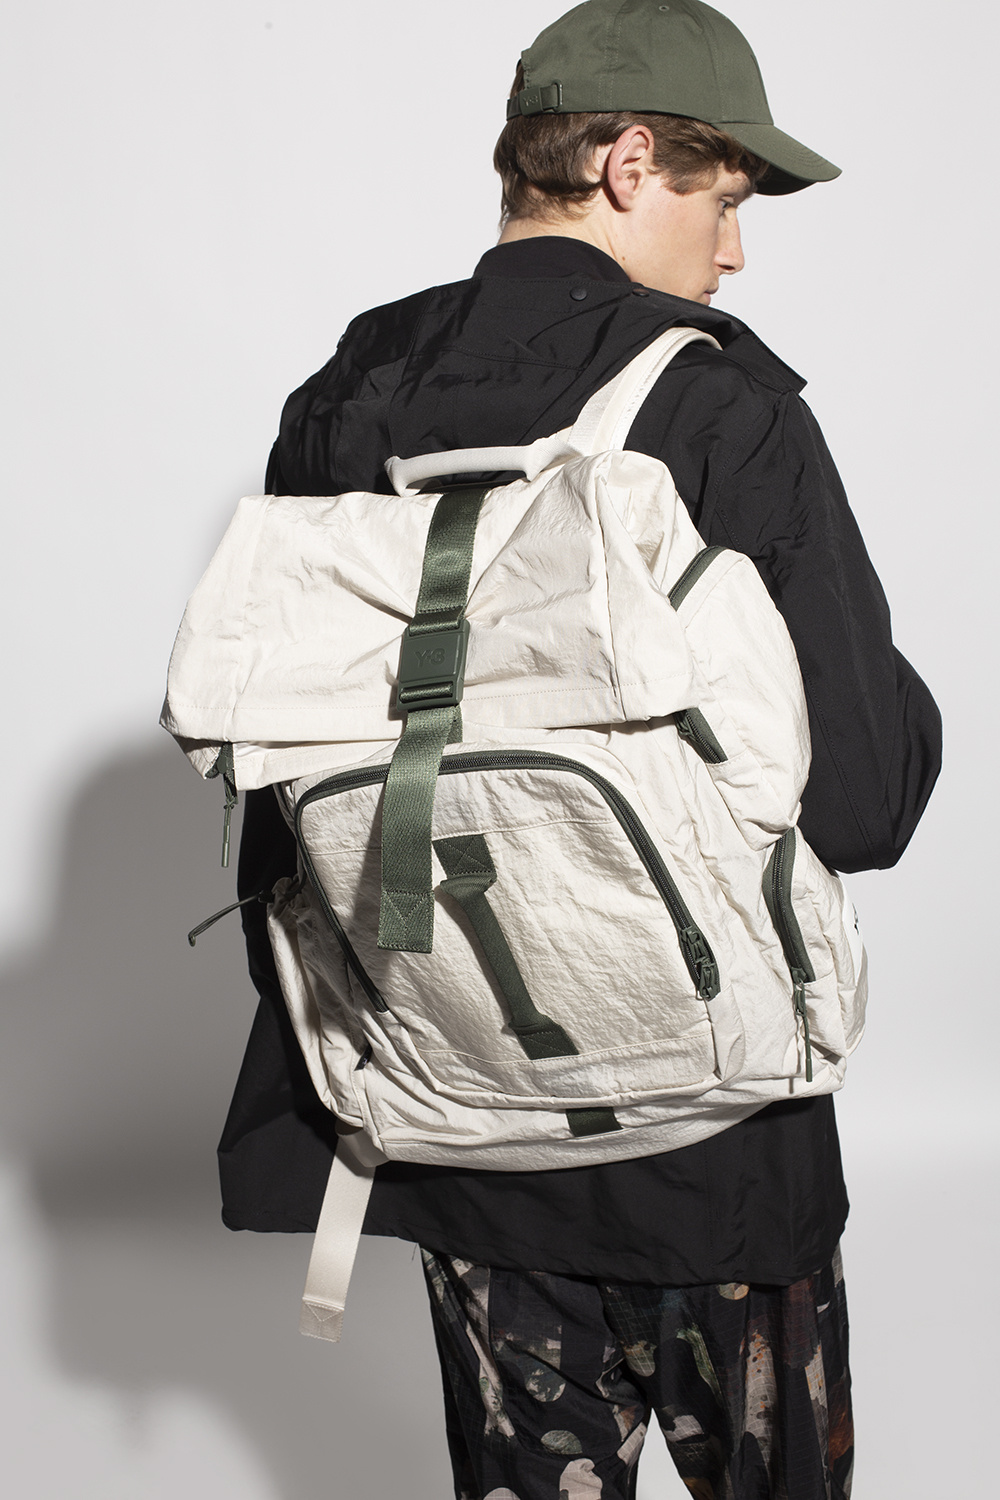 SchaferandweinerShops | Sacoche Doggy Bag | 3 Yohji Yamamoto Backpack with  pockets - Y - Men's Bags